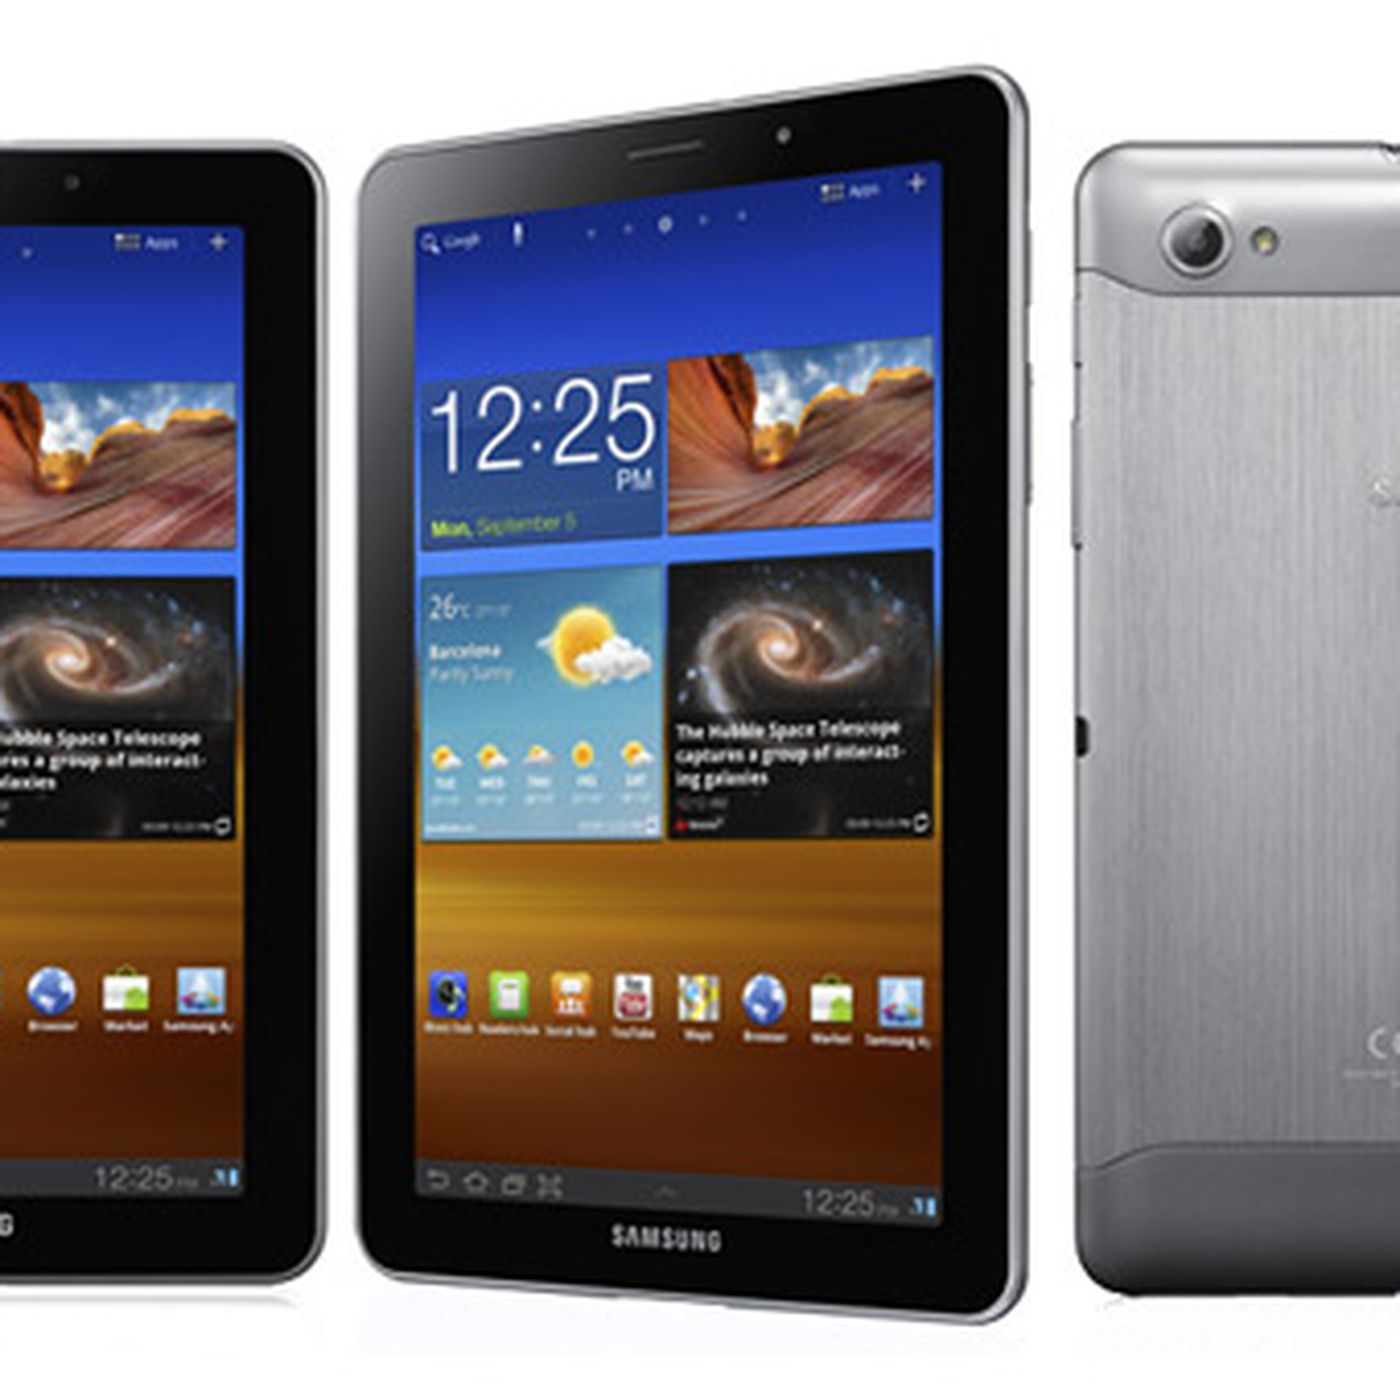 Spor sorumlu kişi hamile sığınak  Samsung Galaxy Tab 7.7 launched at IFA 2011: Super AMOLED Plus display,  7.9mm thickness, and Android 3.2 - The Verge